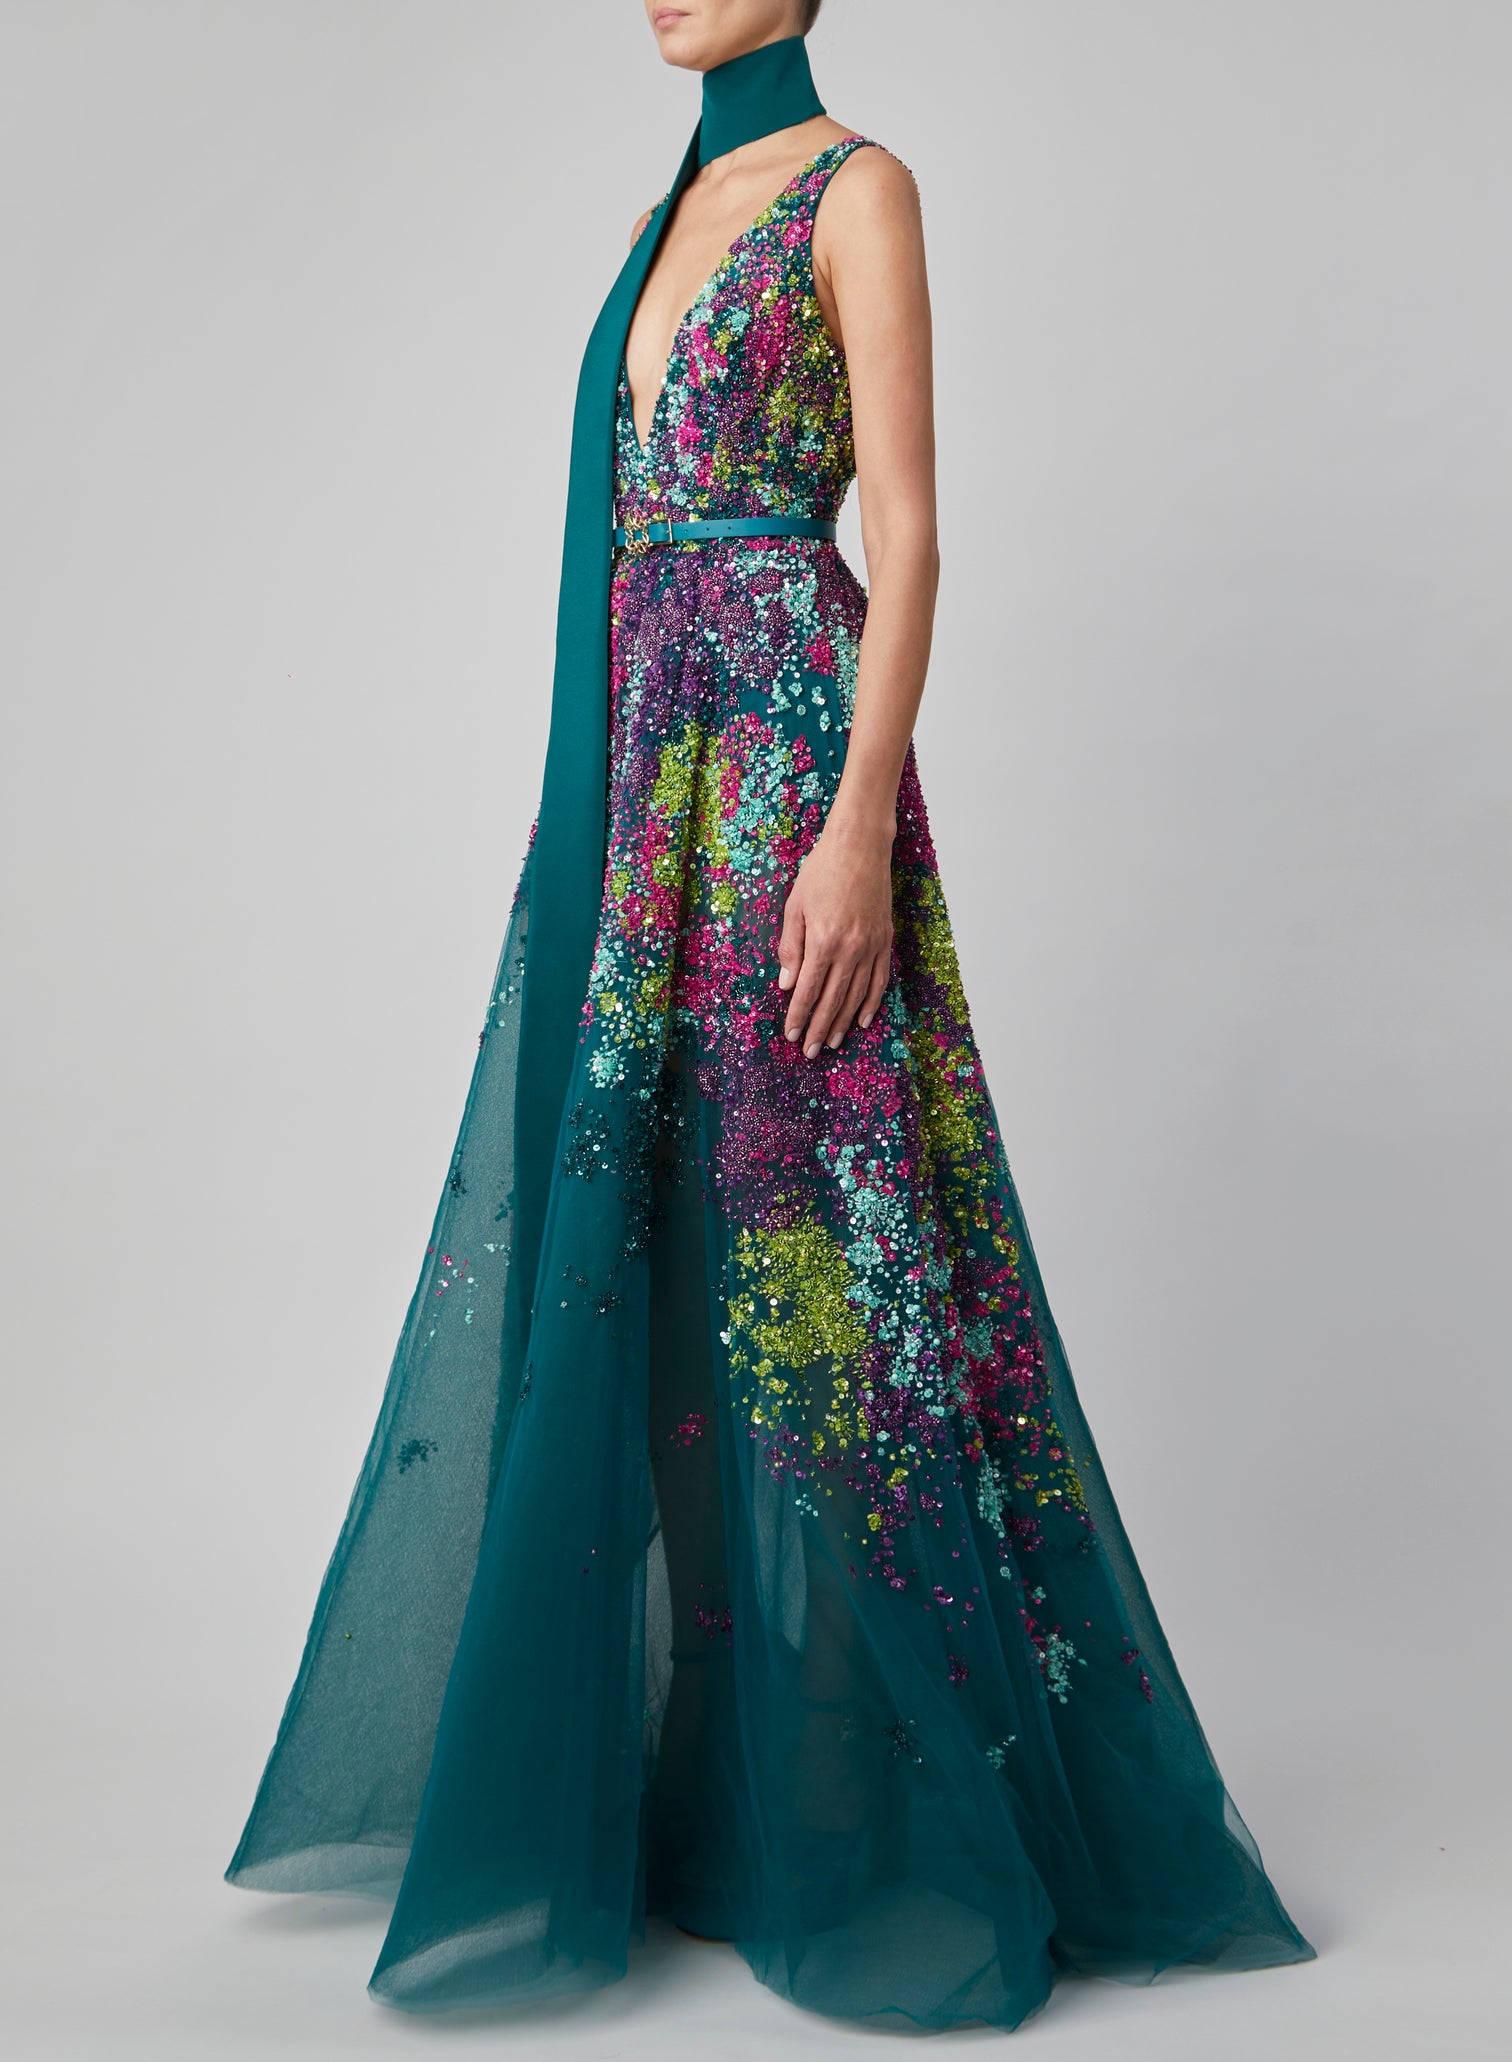 Designer Dresses | Luxury Dresses for Women – ELIE SAAB